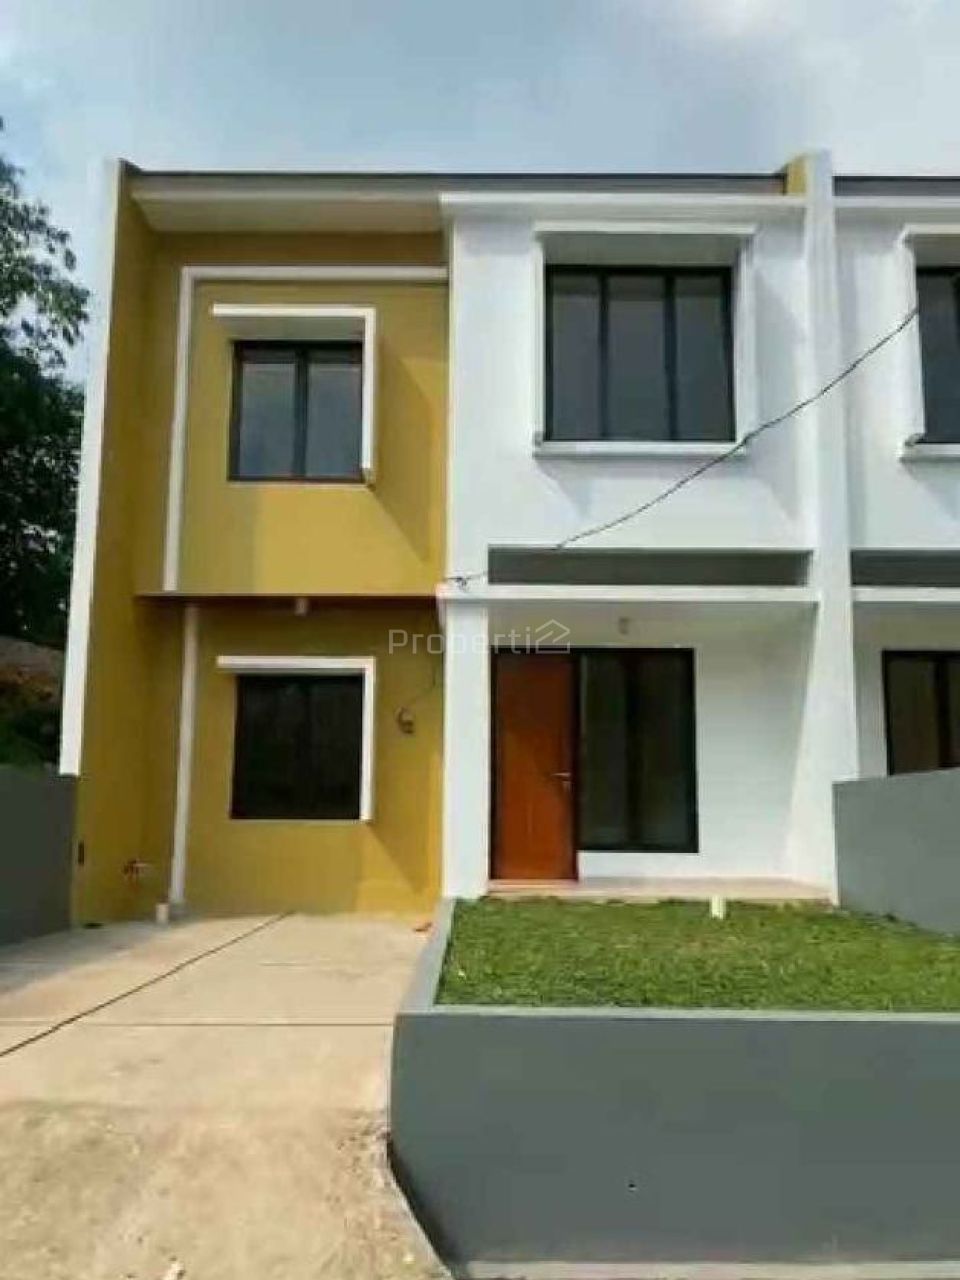 New House in Serpong, South Tangerang City, Banten